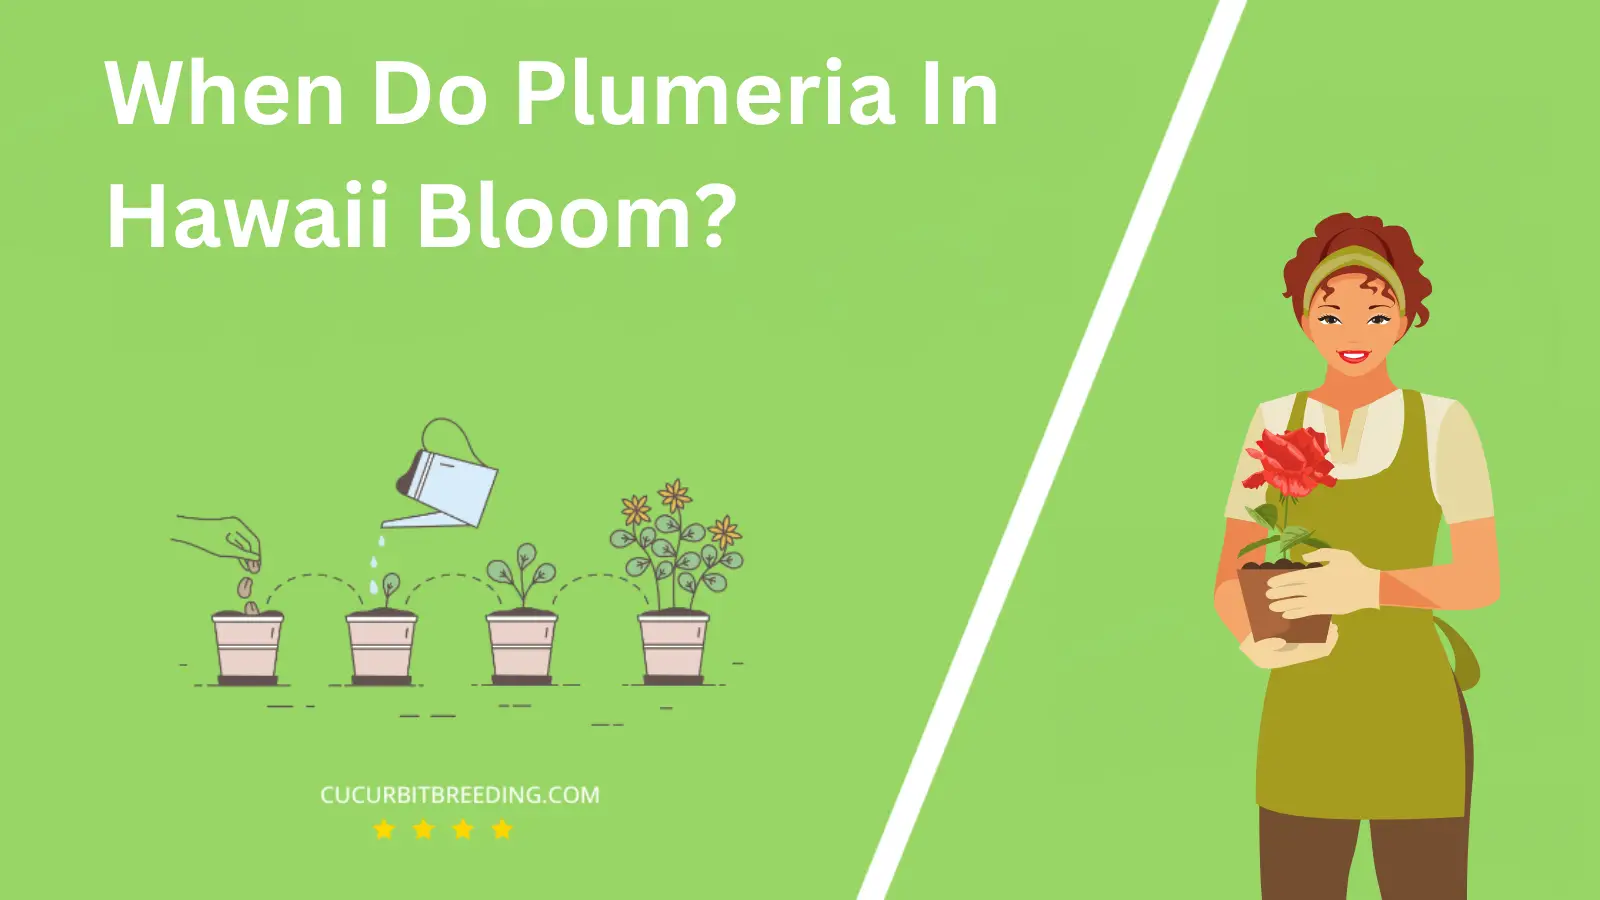 When Do Plumeria In Hawaii Bloom?